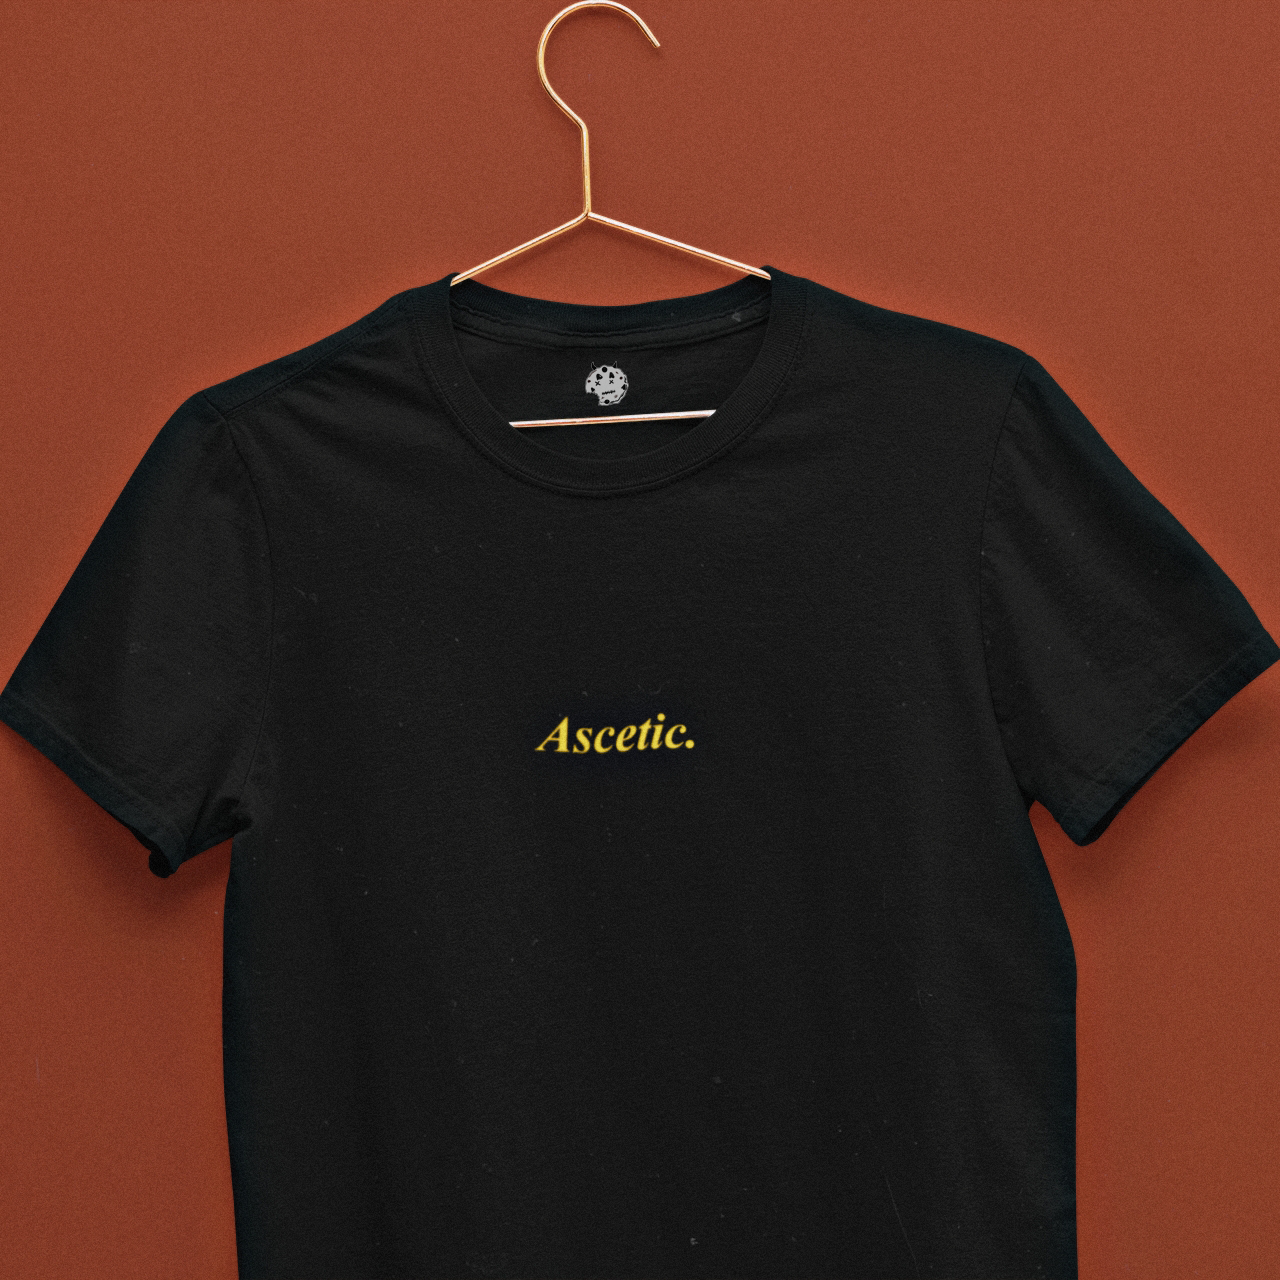 Ascetic written in golden yellow on black t-shirt on a hanger.